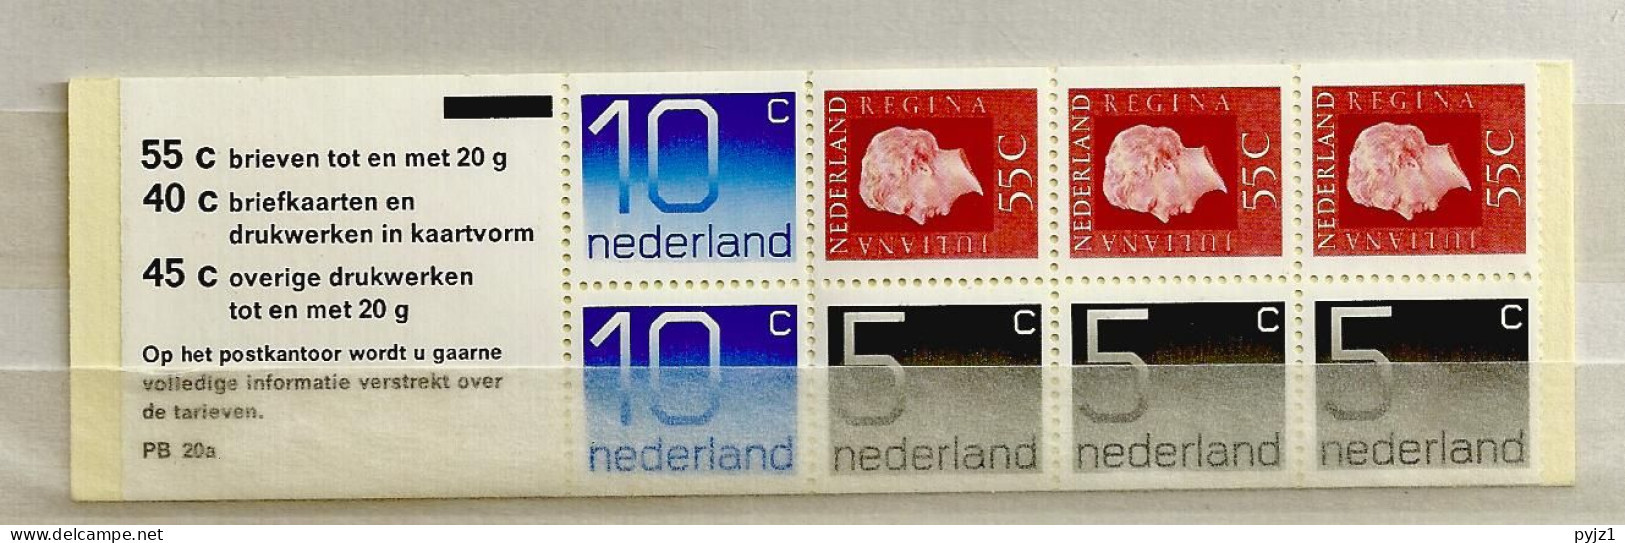 1976 MNH PB 20a  Nederland Postfris - Booklets & Coils